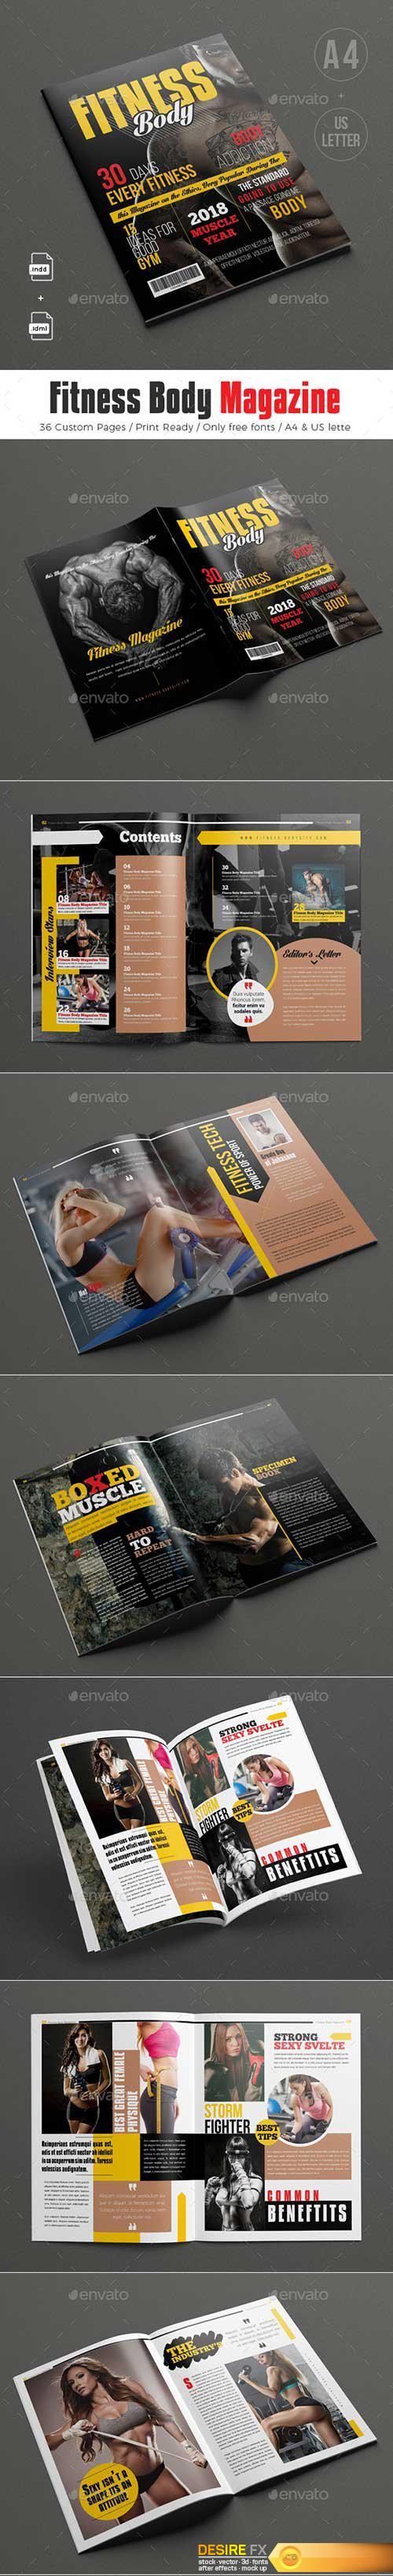 Graphicriver - Fitness Body Magazine 20887879